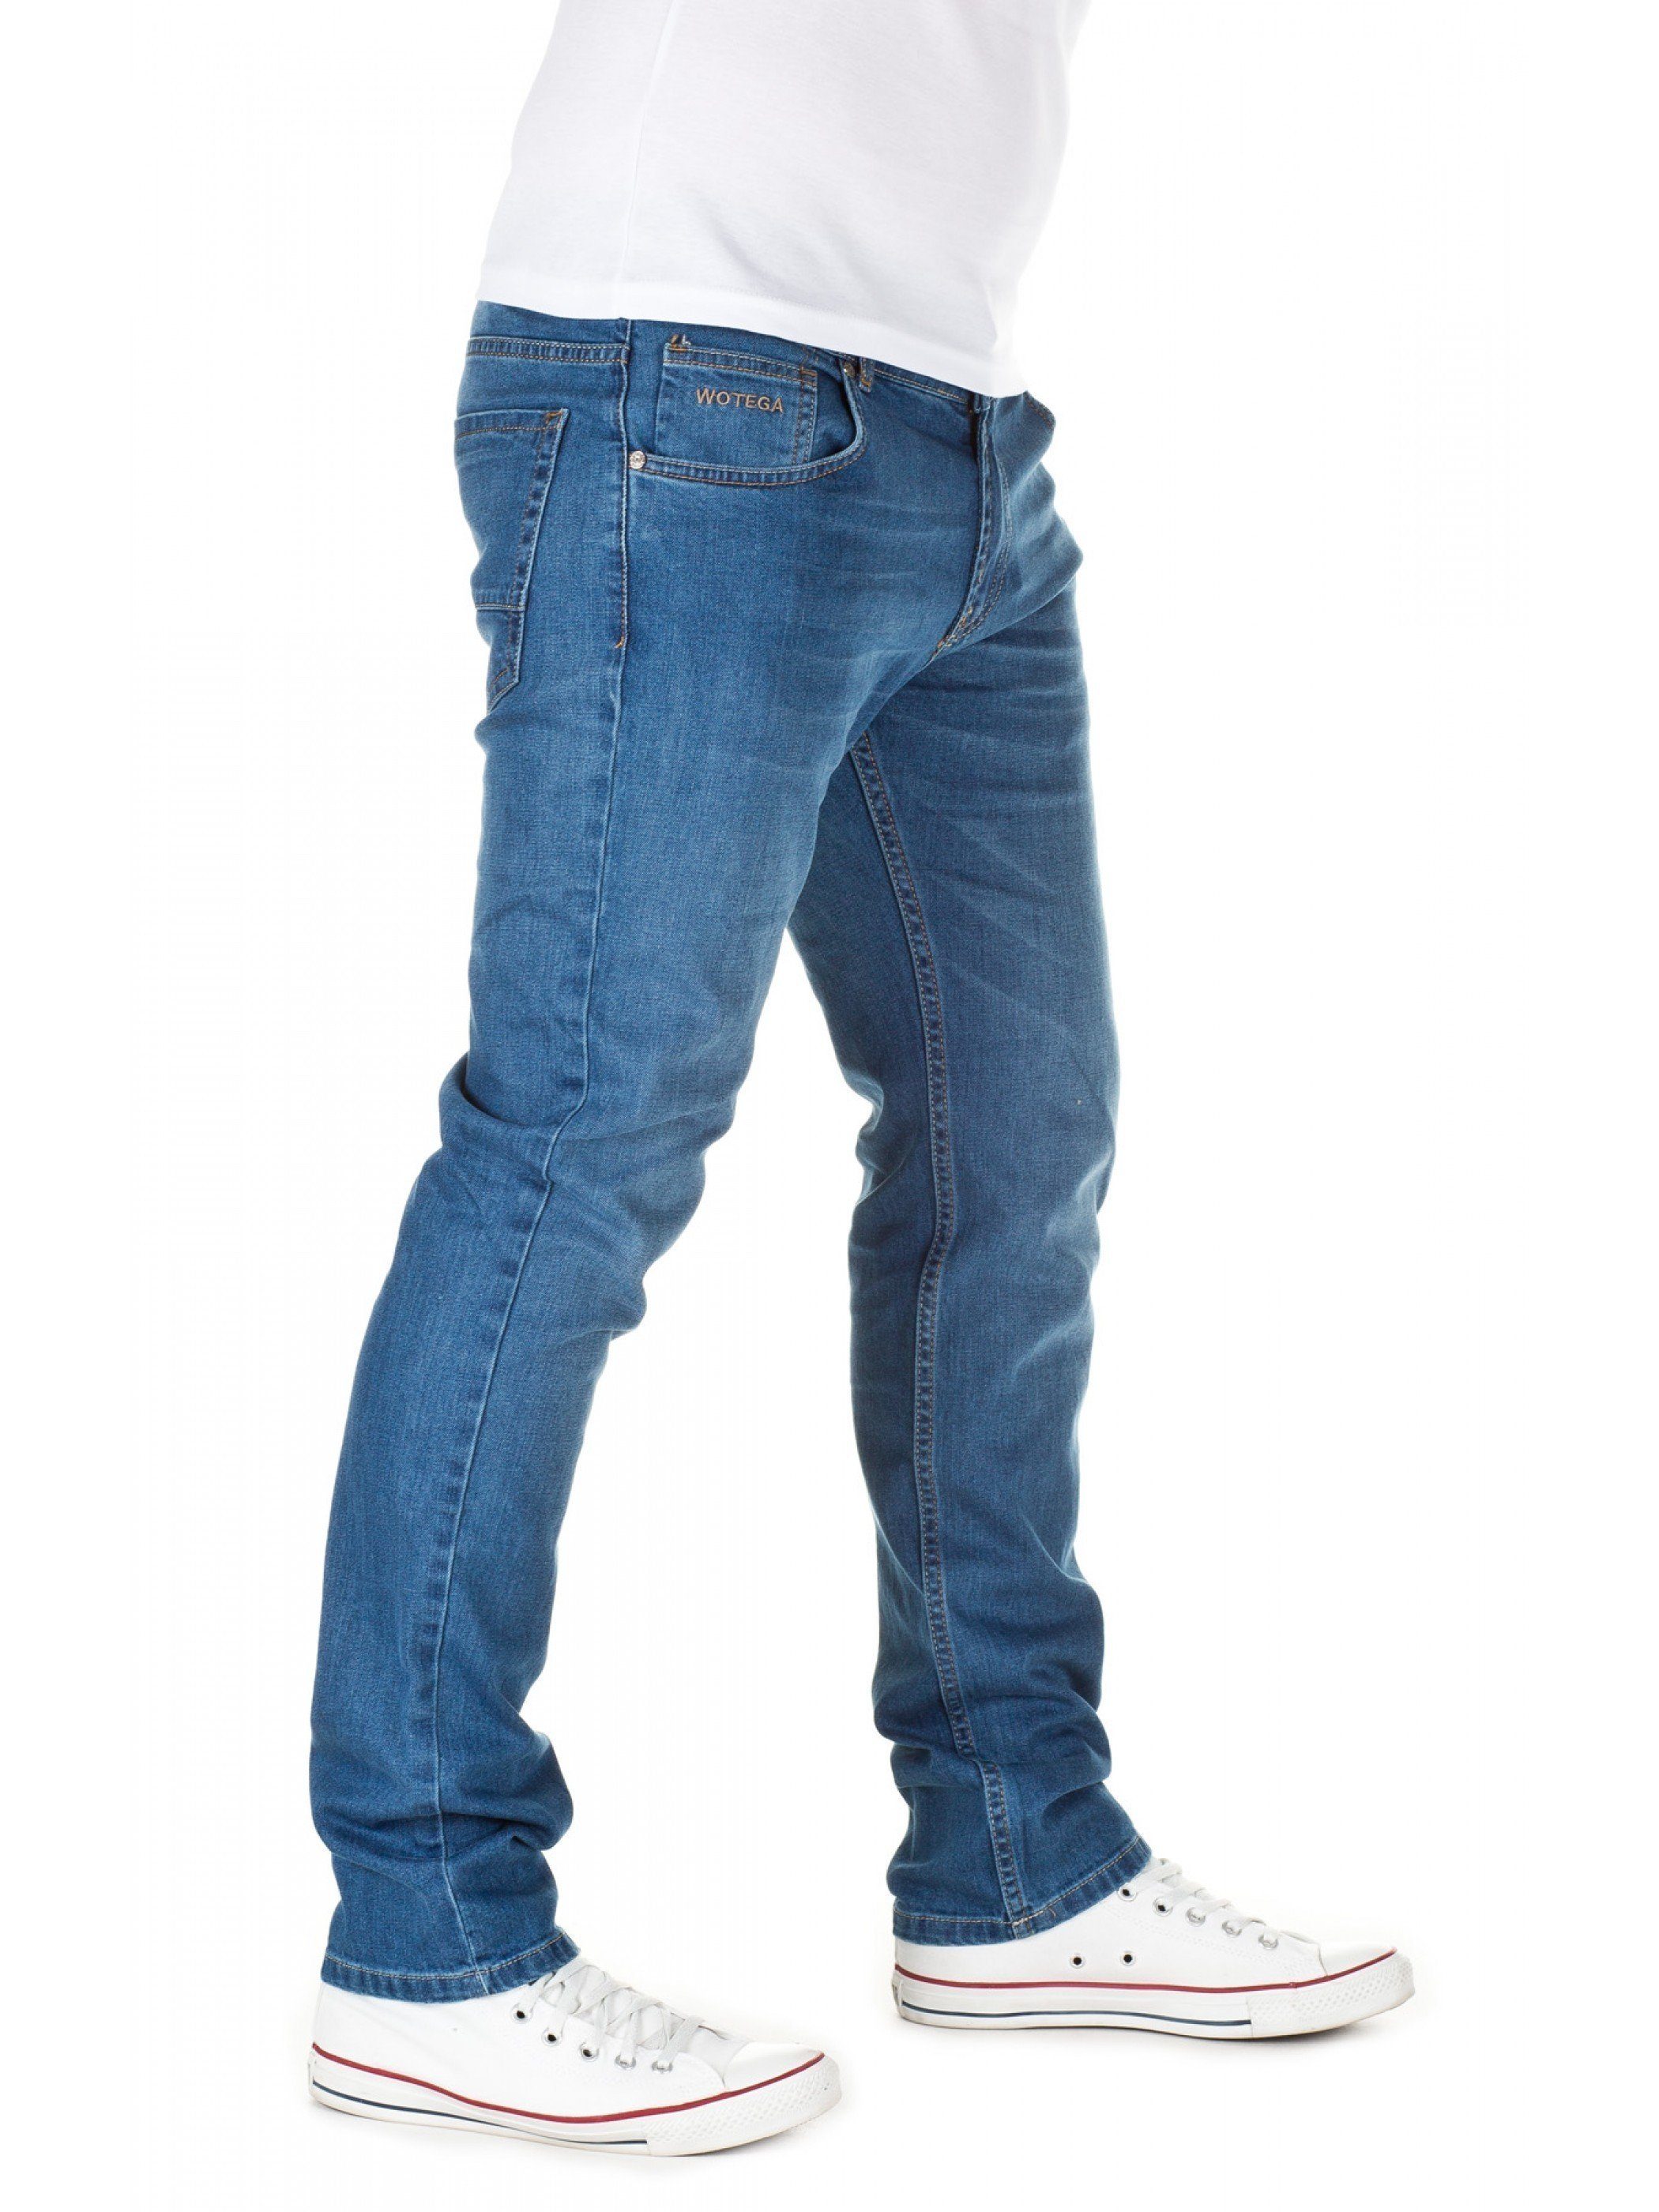 3928) Jeans Slim-fit-Jeans (blue indigo WOTEGA Blau Travis